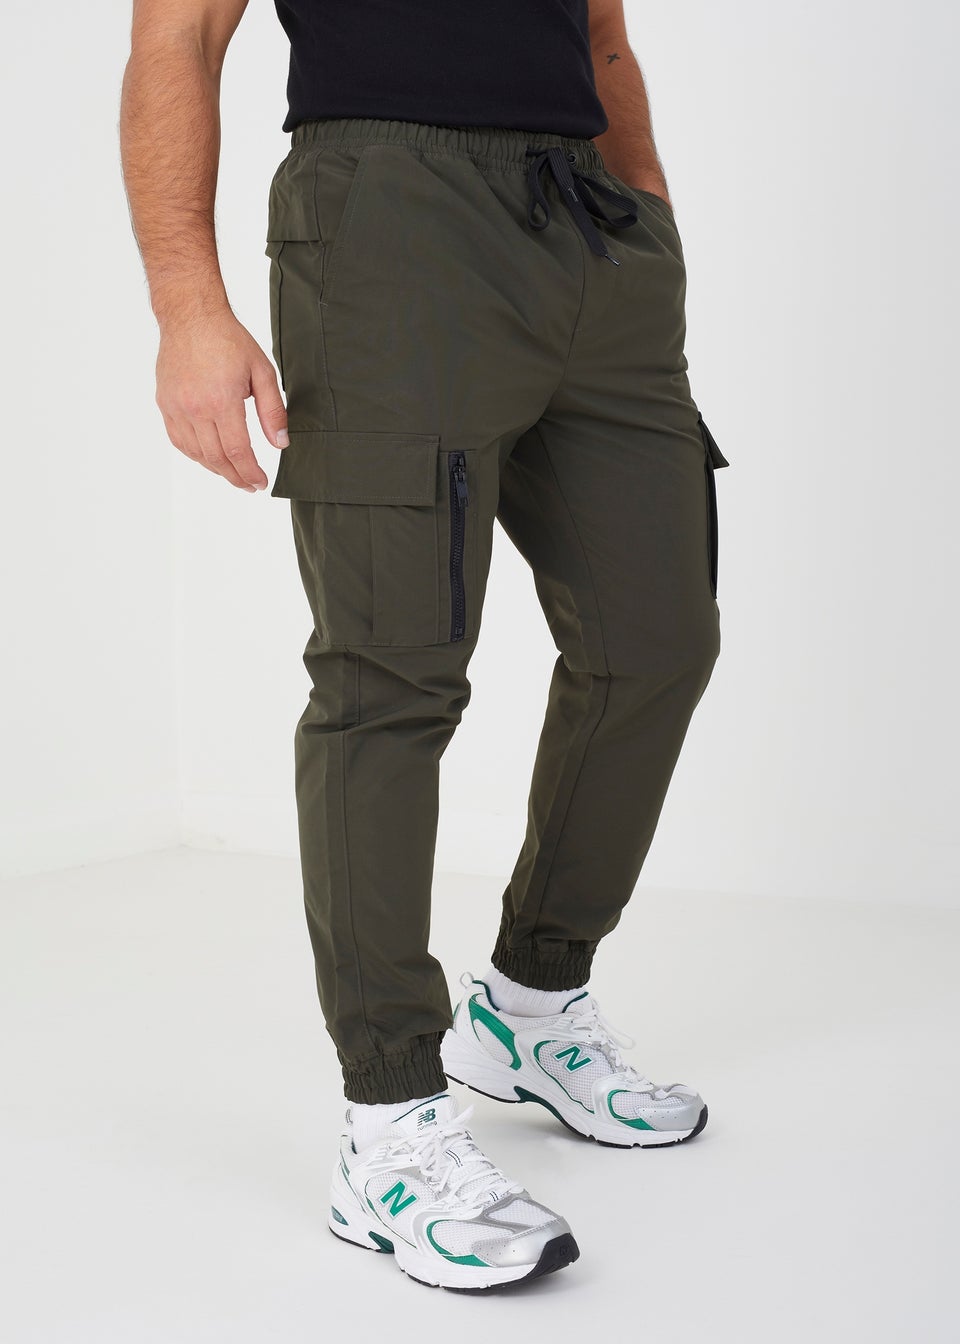 Sea Green Mens Corporate Uniform Shirt And Black Trousers Unstitched F–  Uniform Sarees